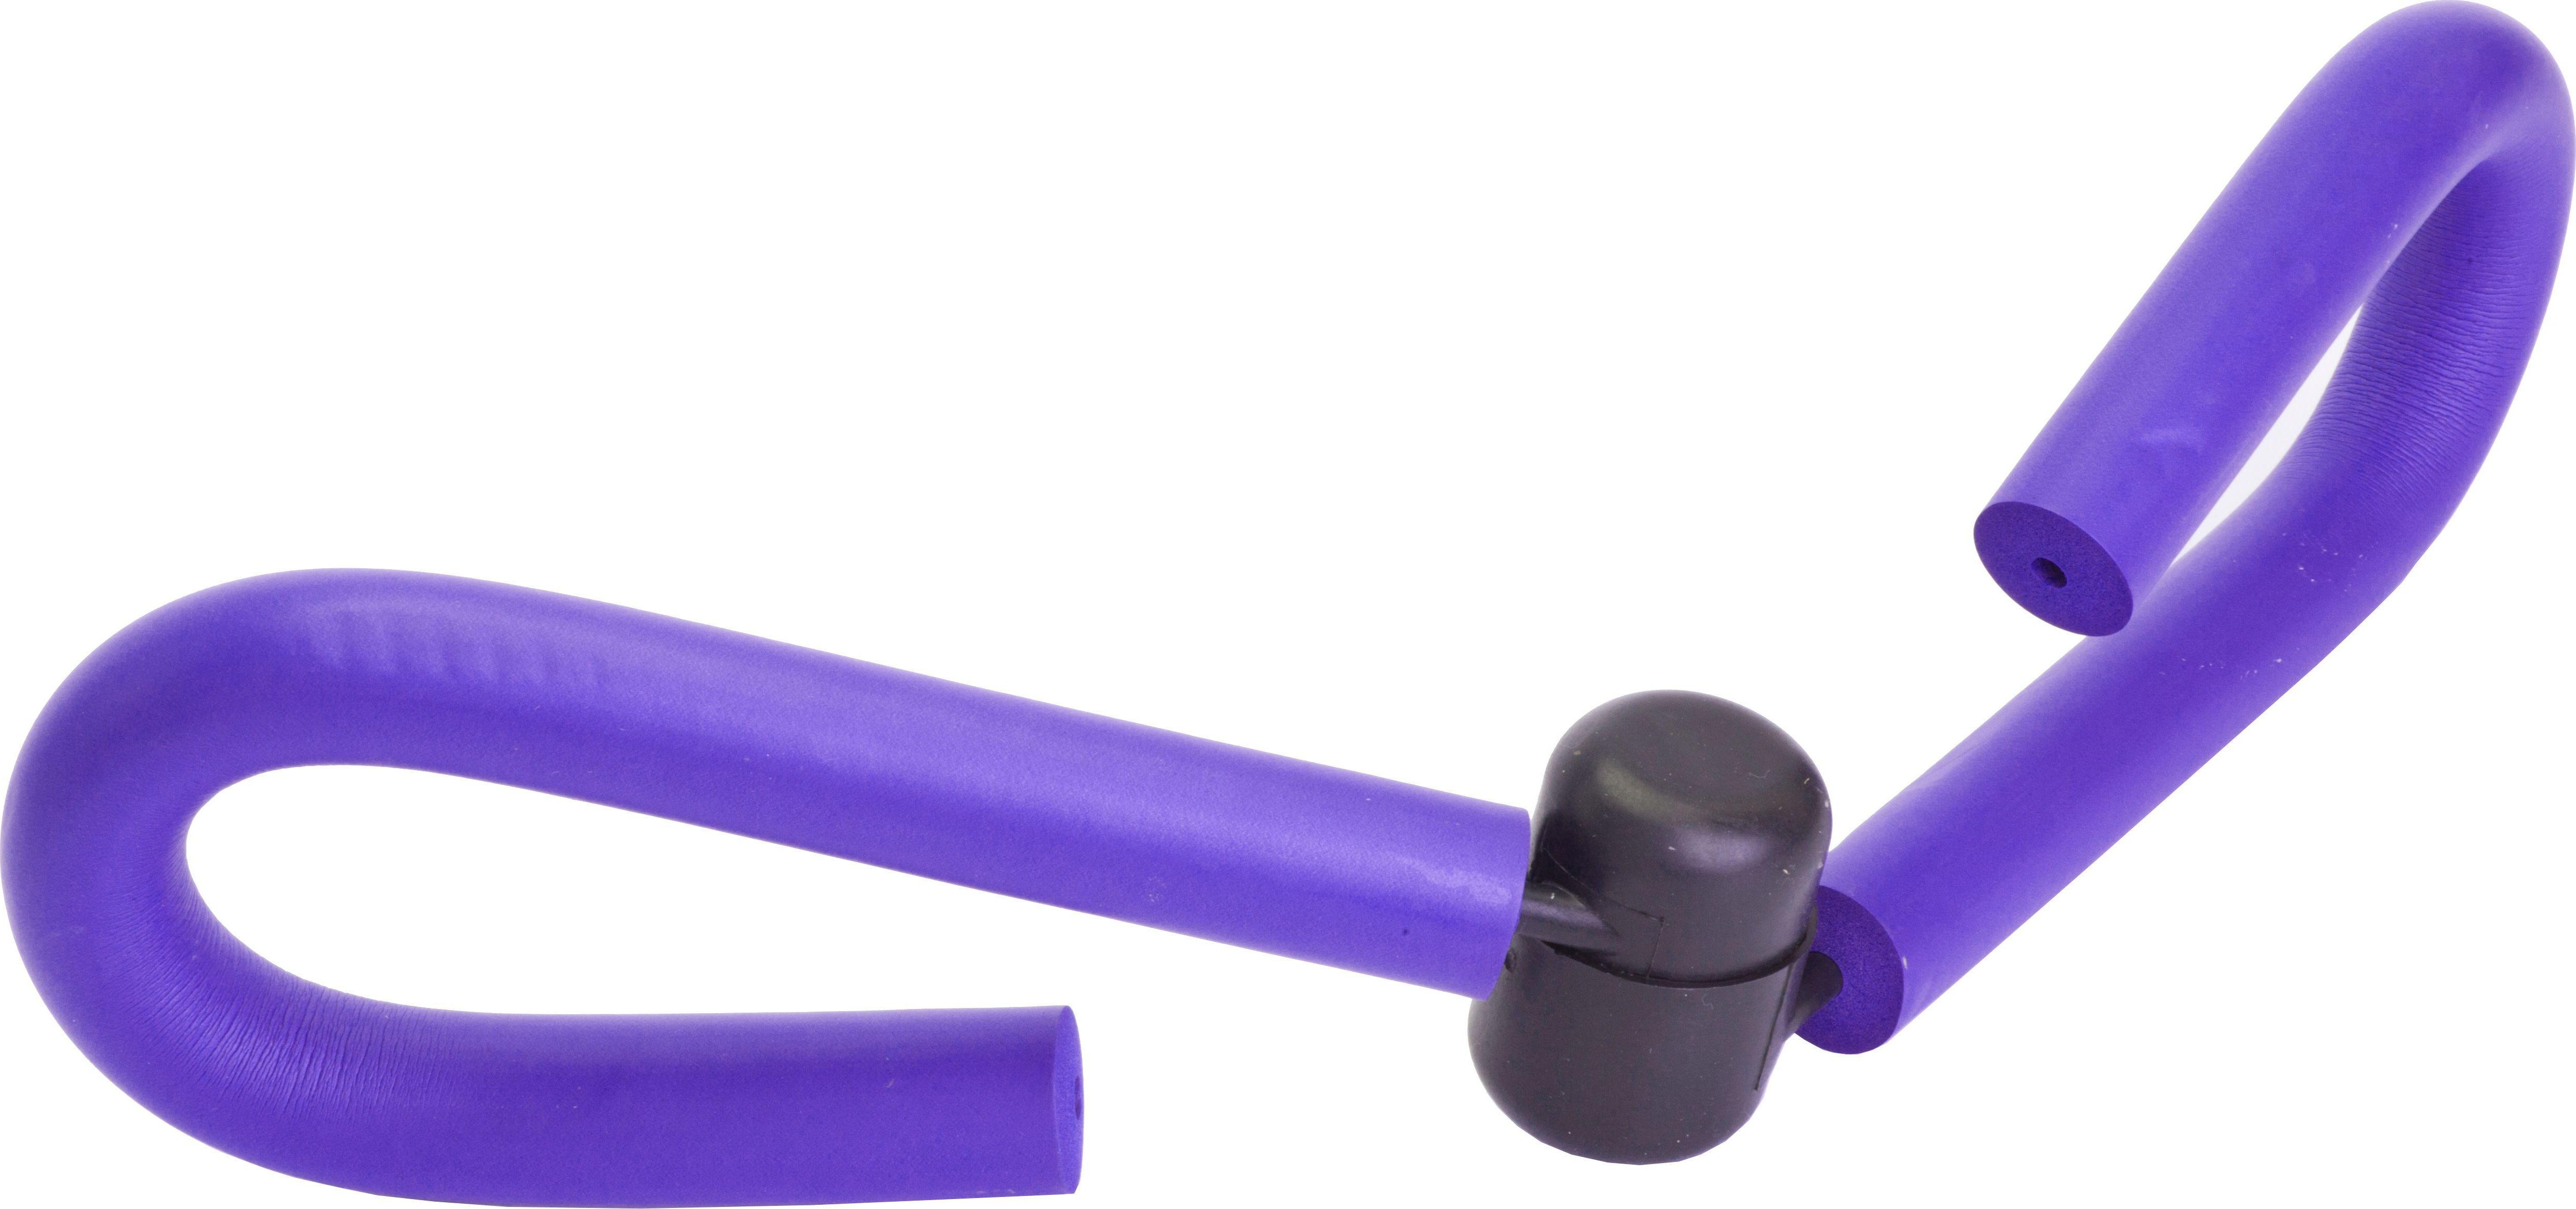 Эспандер для бедер и рук «ТАЙ-МАСТЕР», фиолетовый